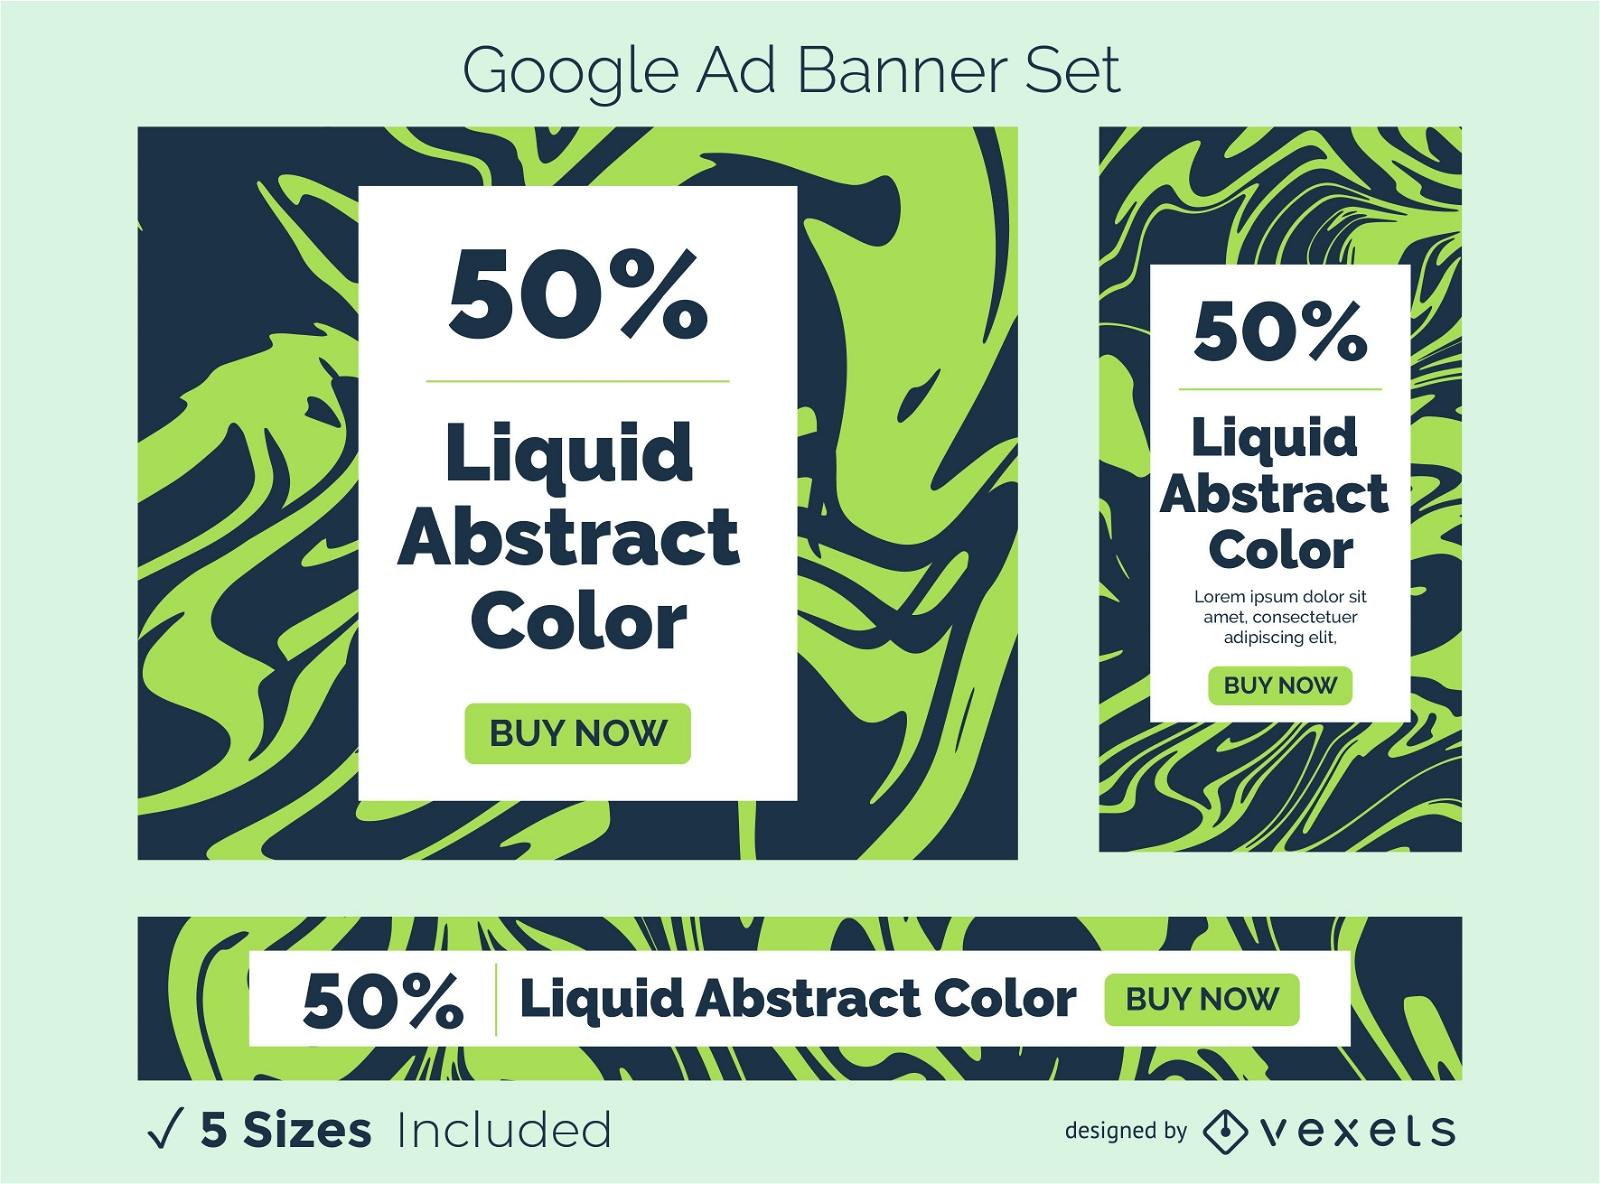 Liquid abstract ad banner set